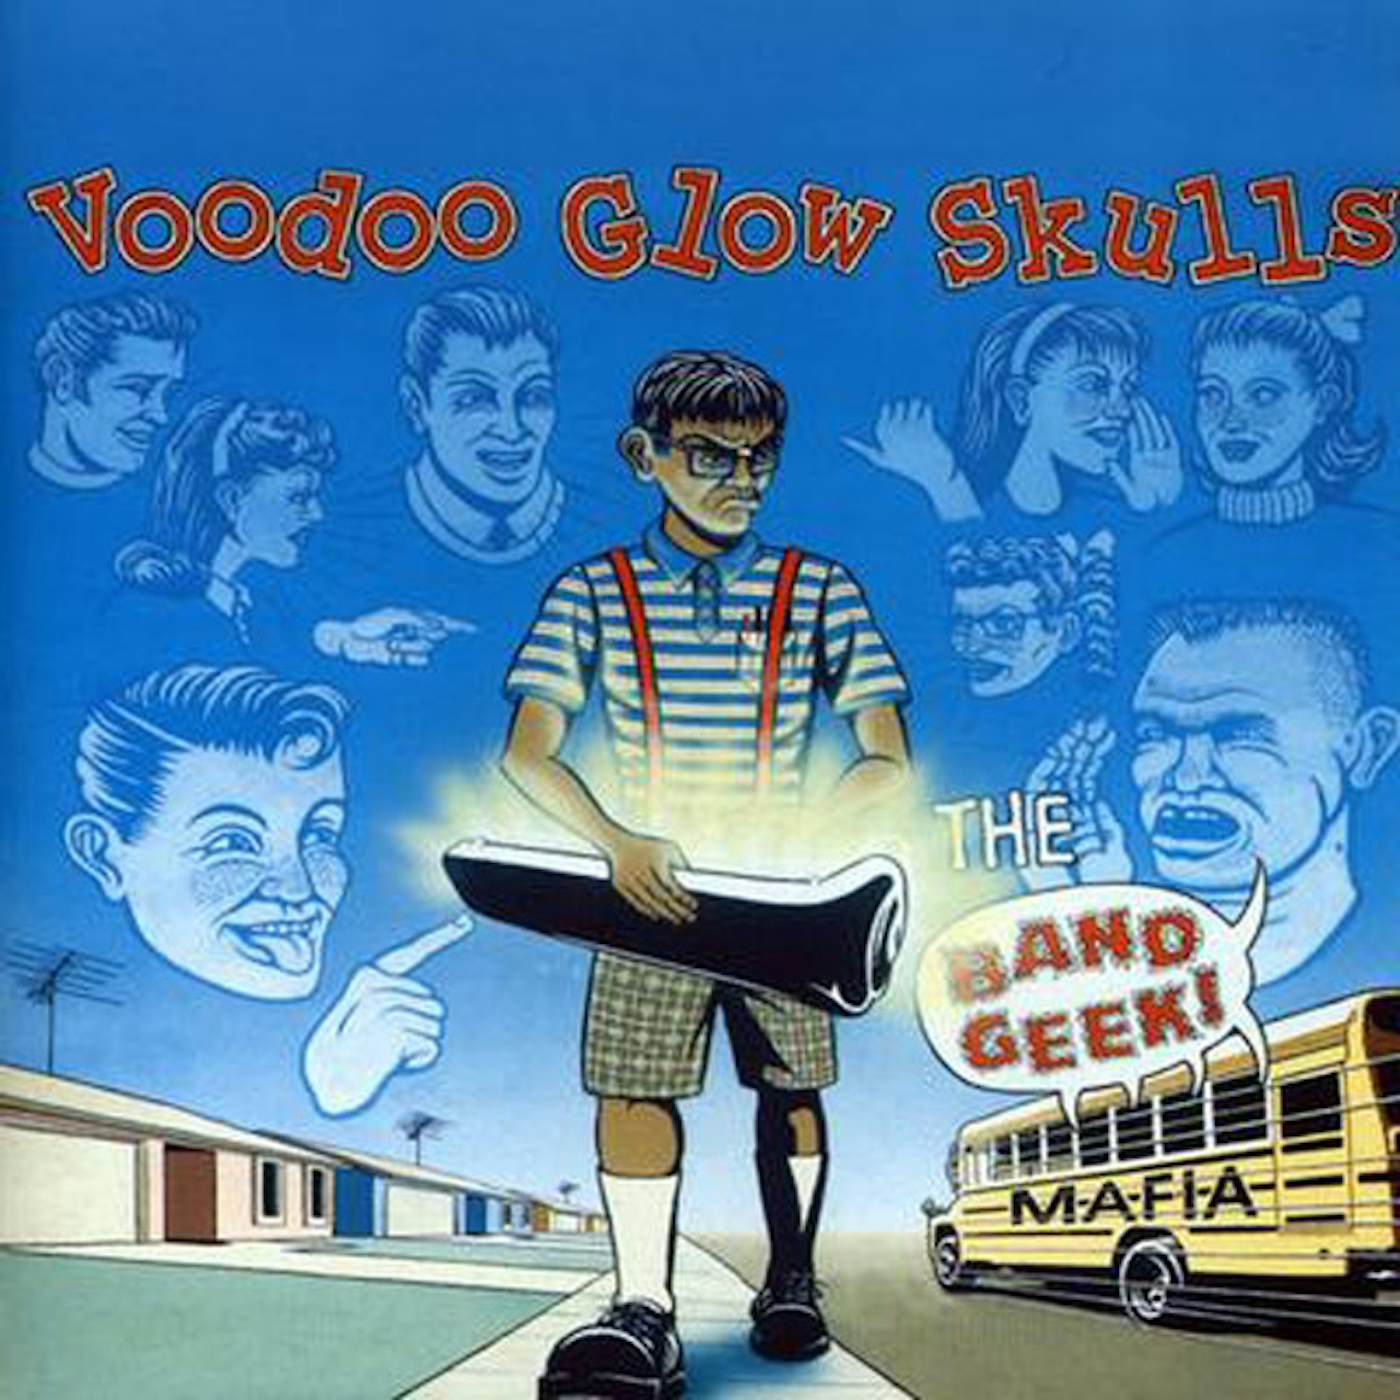 Voodoo Glow Skulls BAND GEEK MAFIA Vinyl Record